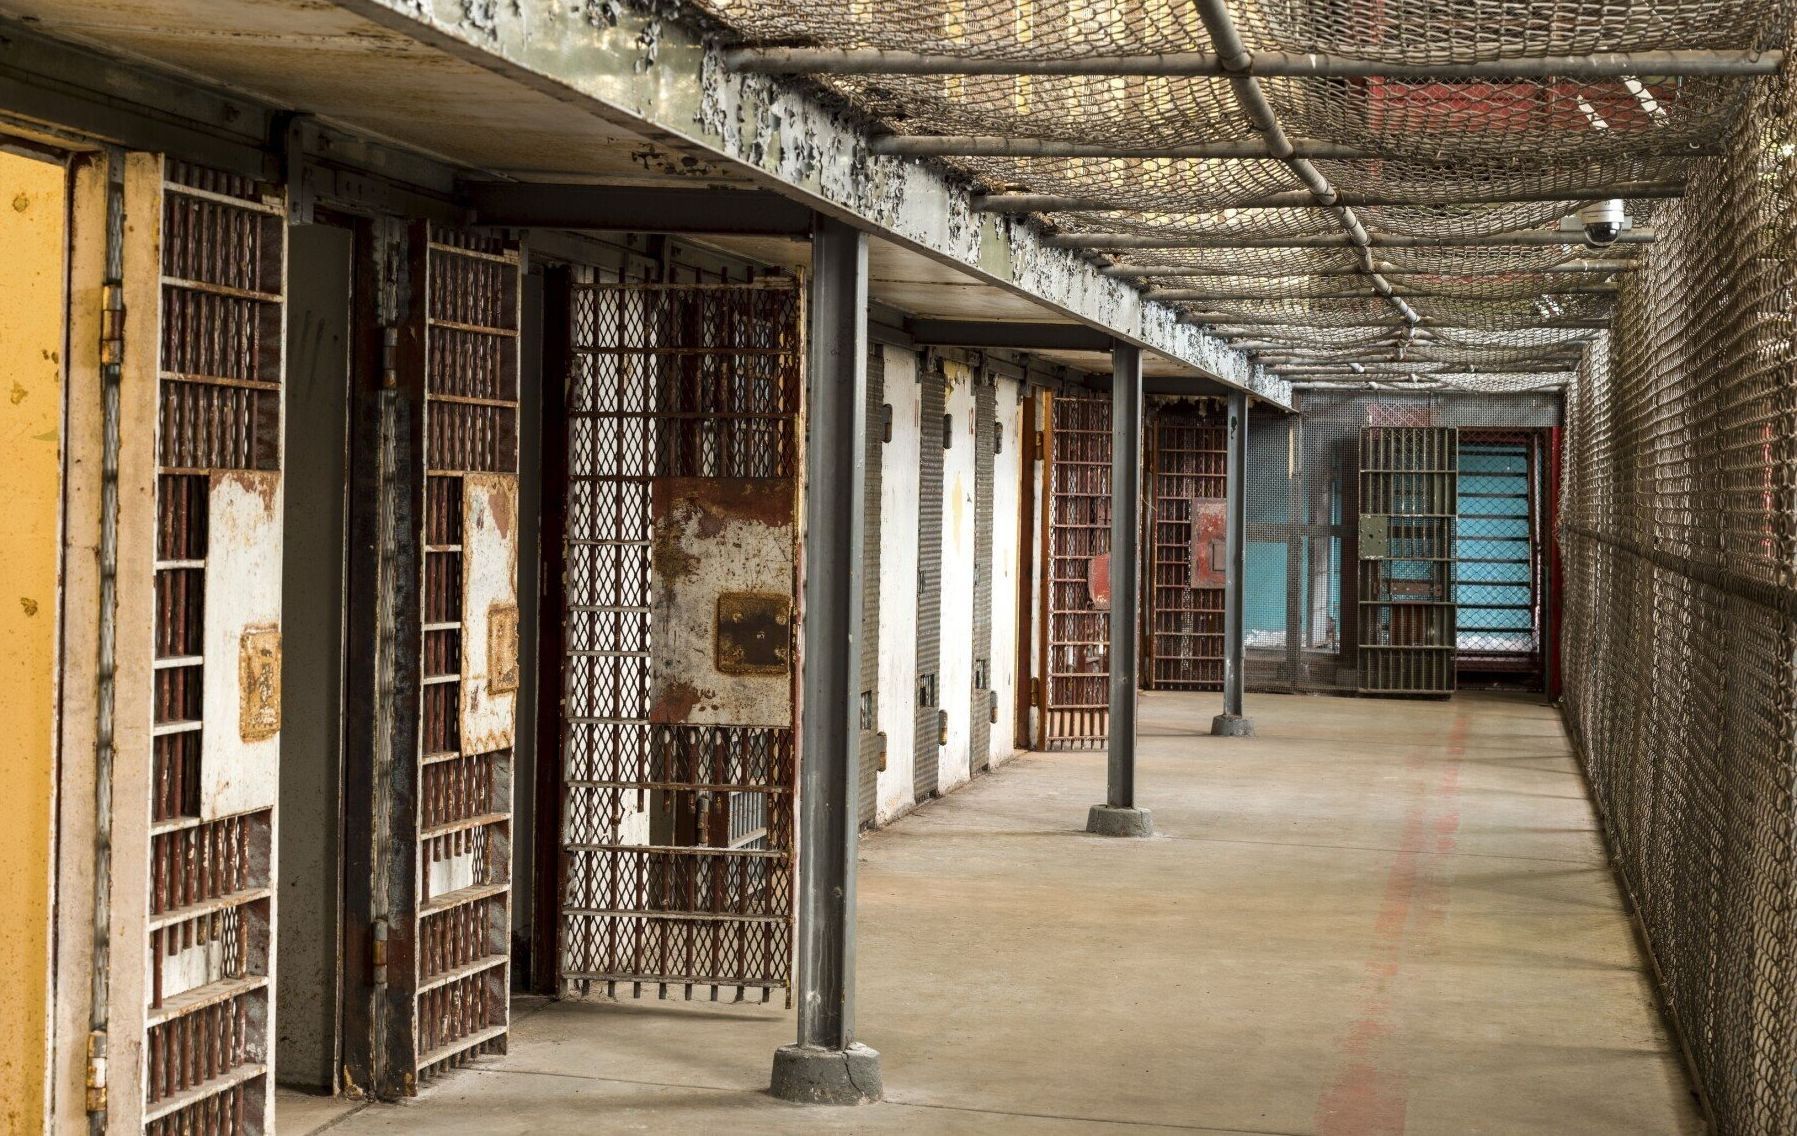 Abandoned prison cells